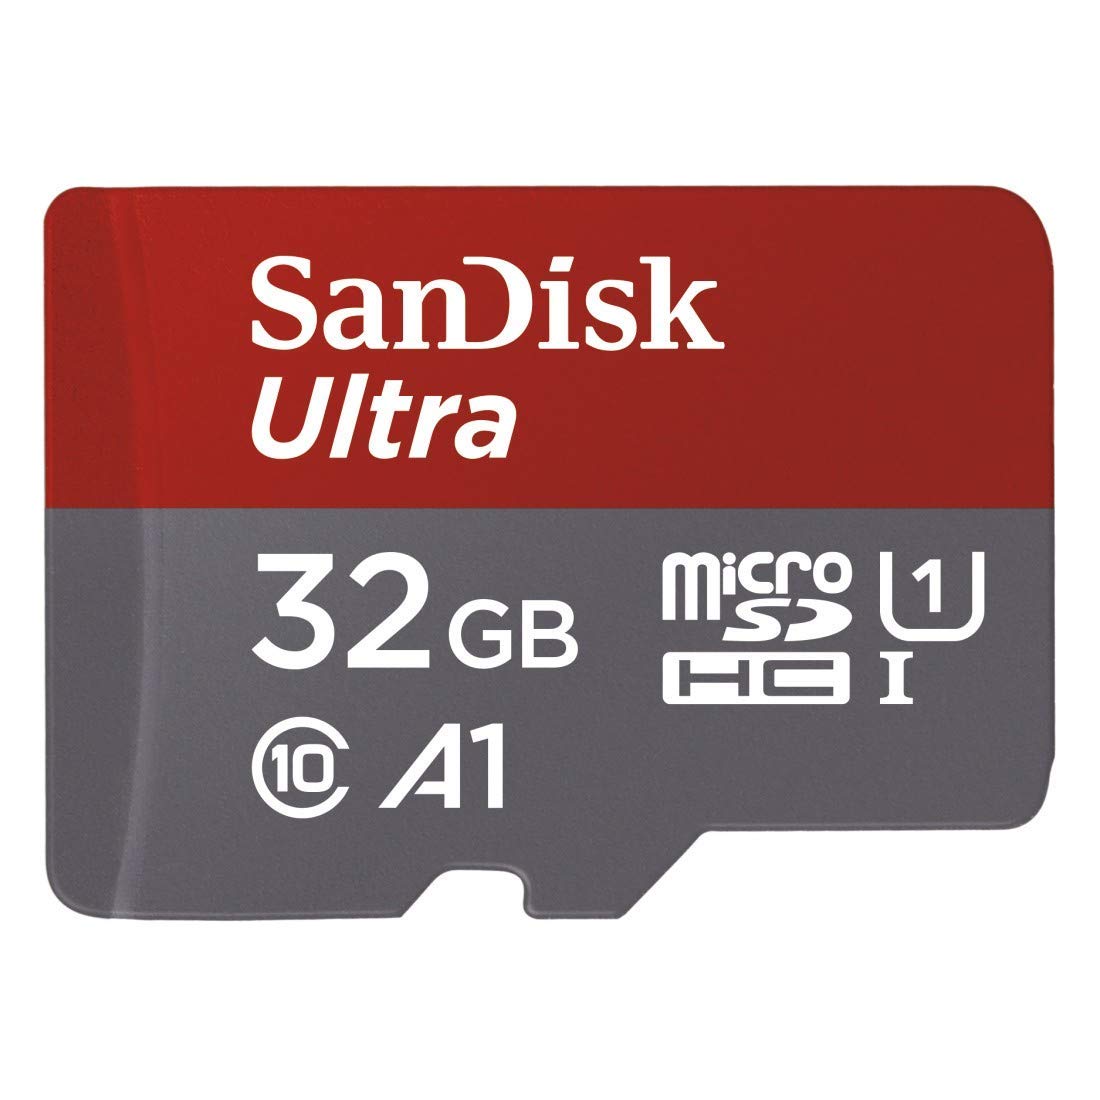 sandisk-ultra-32gb-microsd.jpg